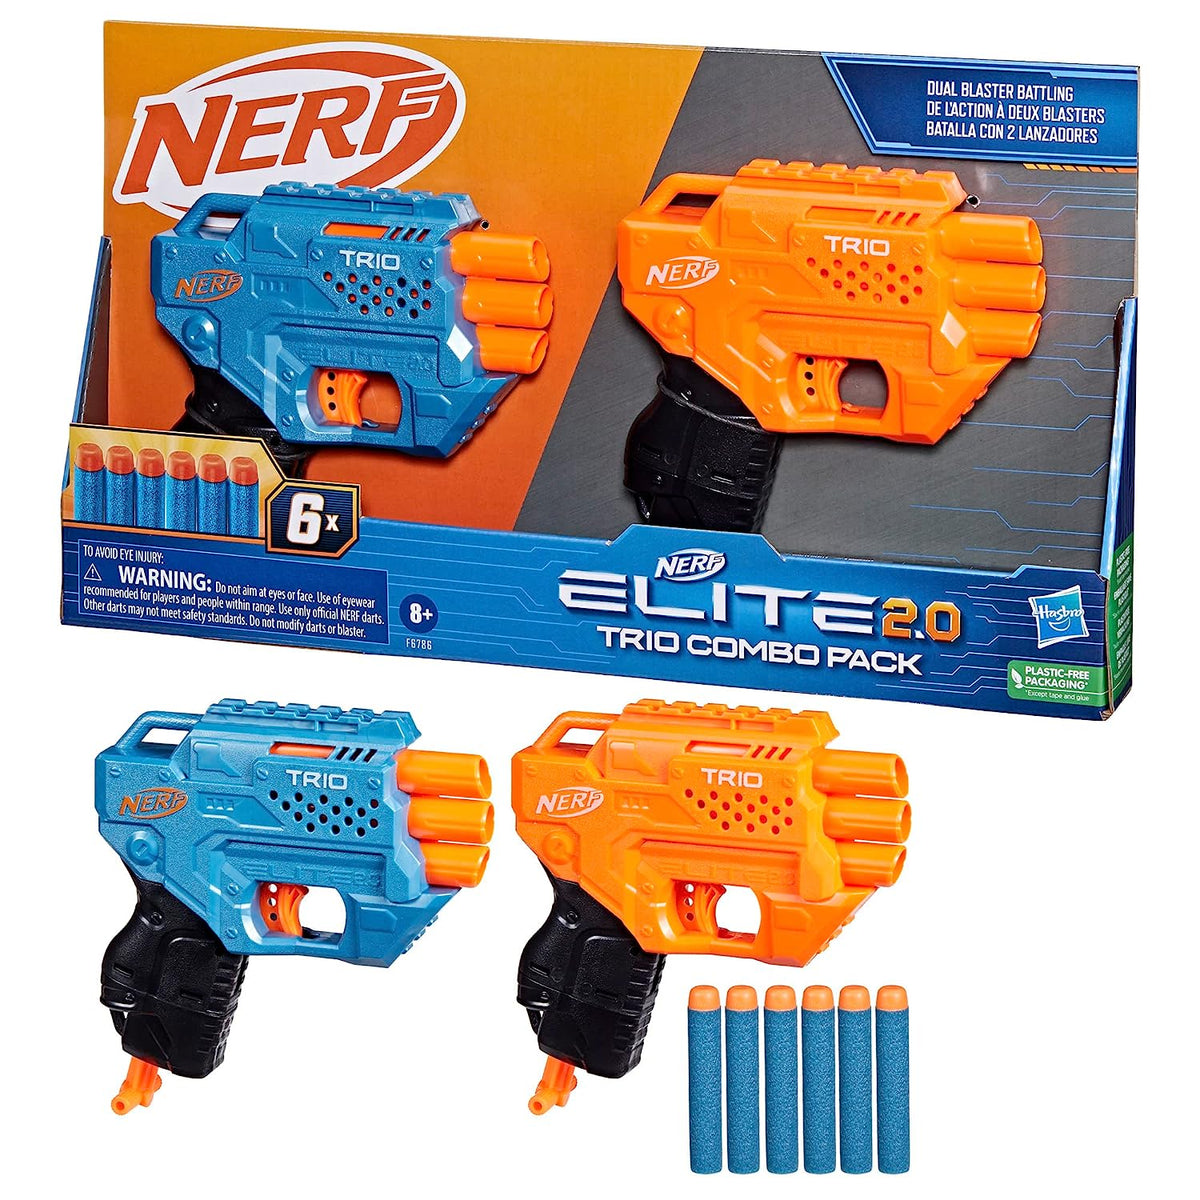 Nerf Elite 2.0 Trio Combo Pack, 2 Trio Nerf Blasters, 6 Nerf Elite Darts, Pull Down Priming, Toy Foam Blaster for Kids Outdoor Games